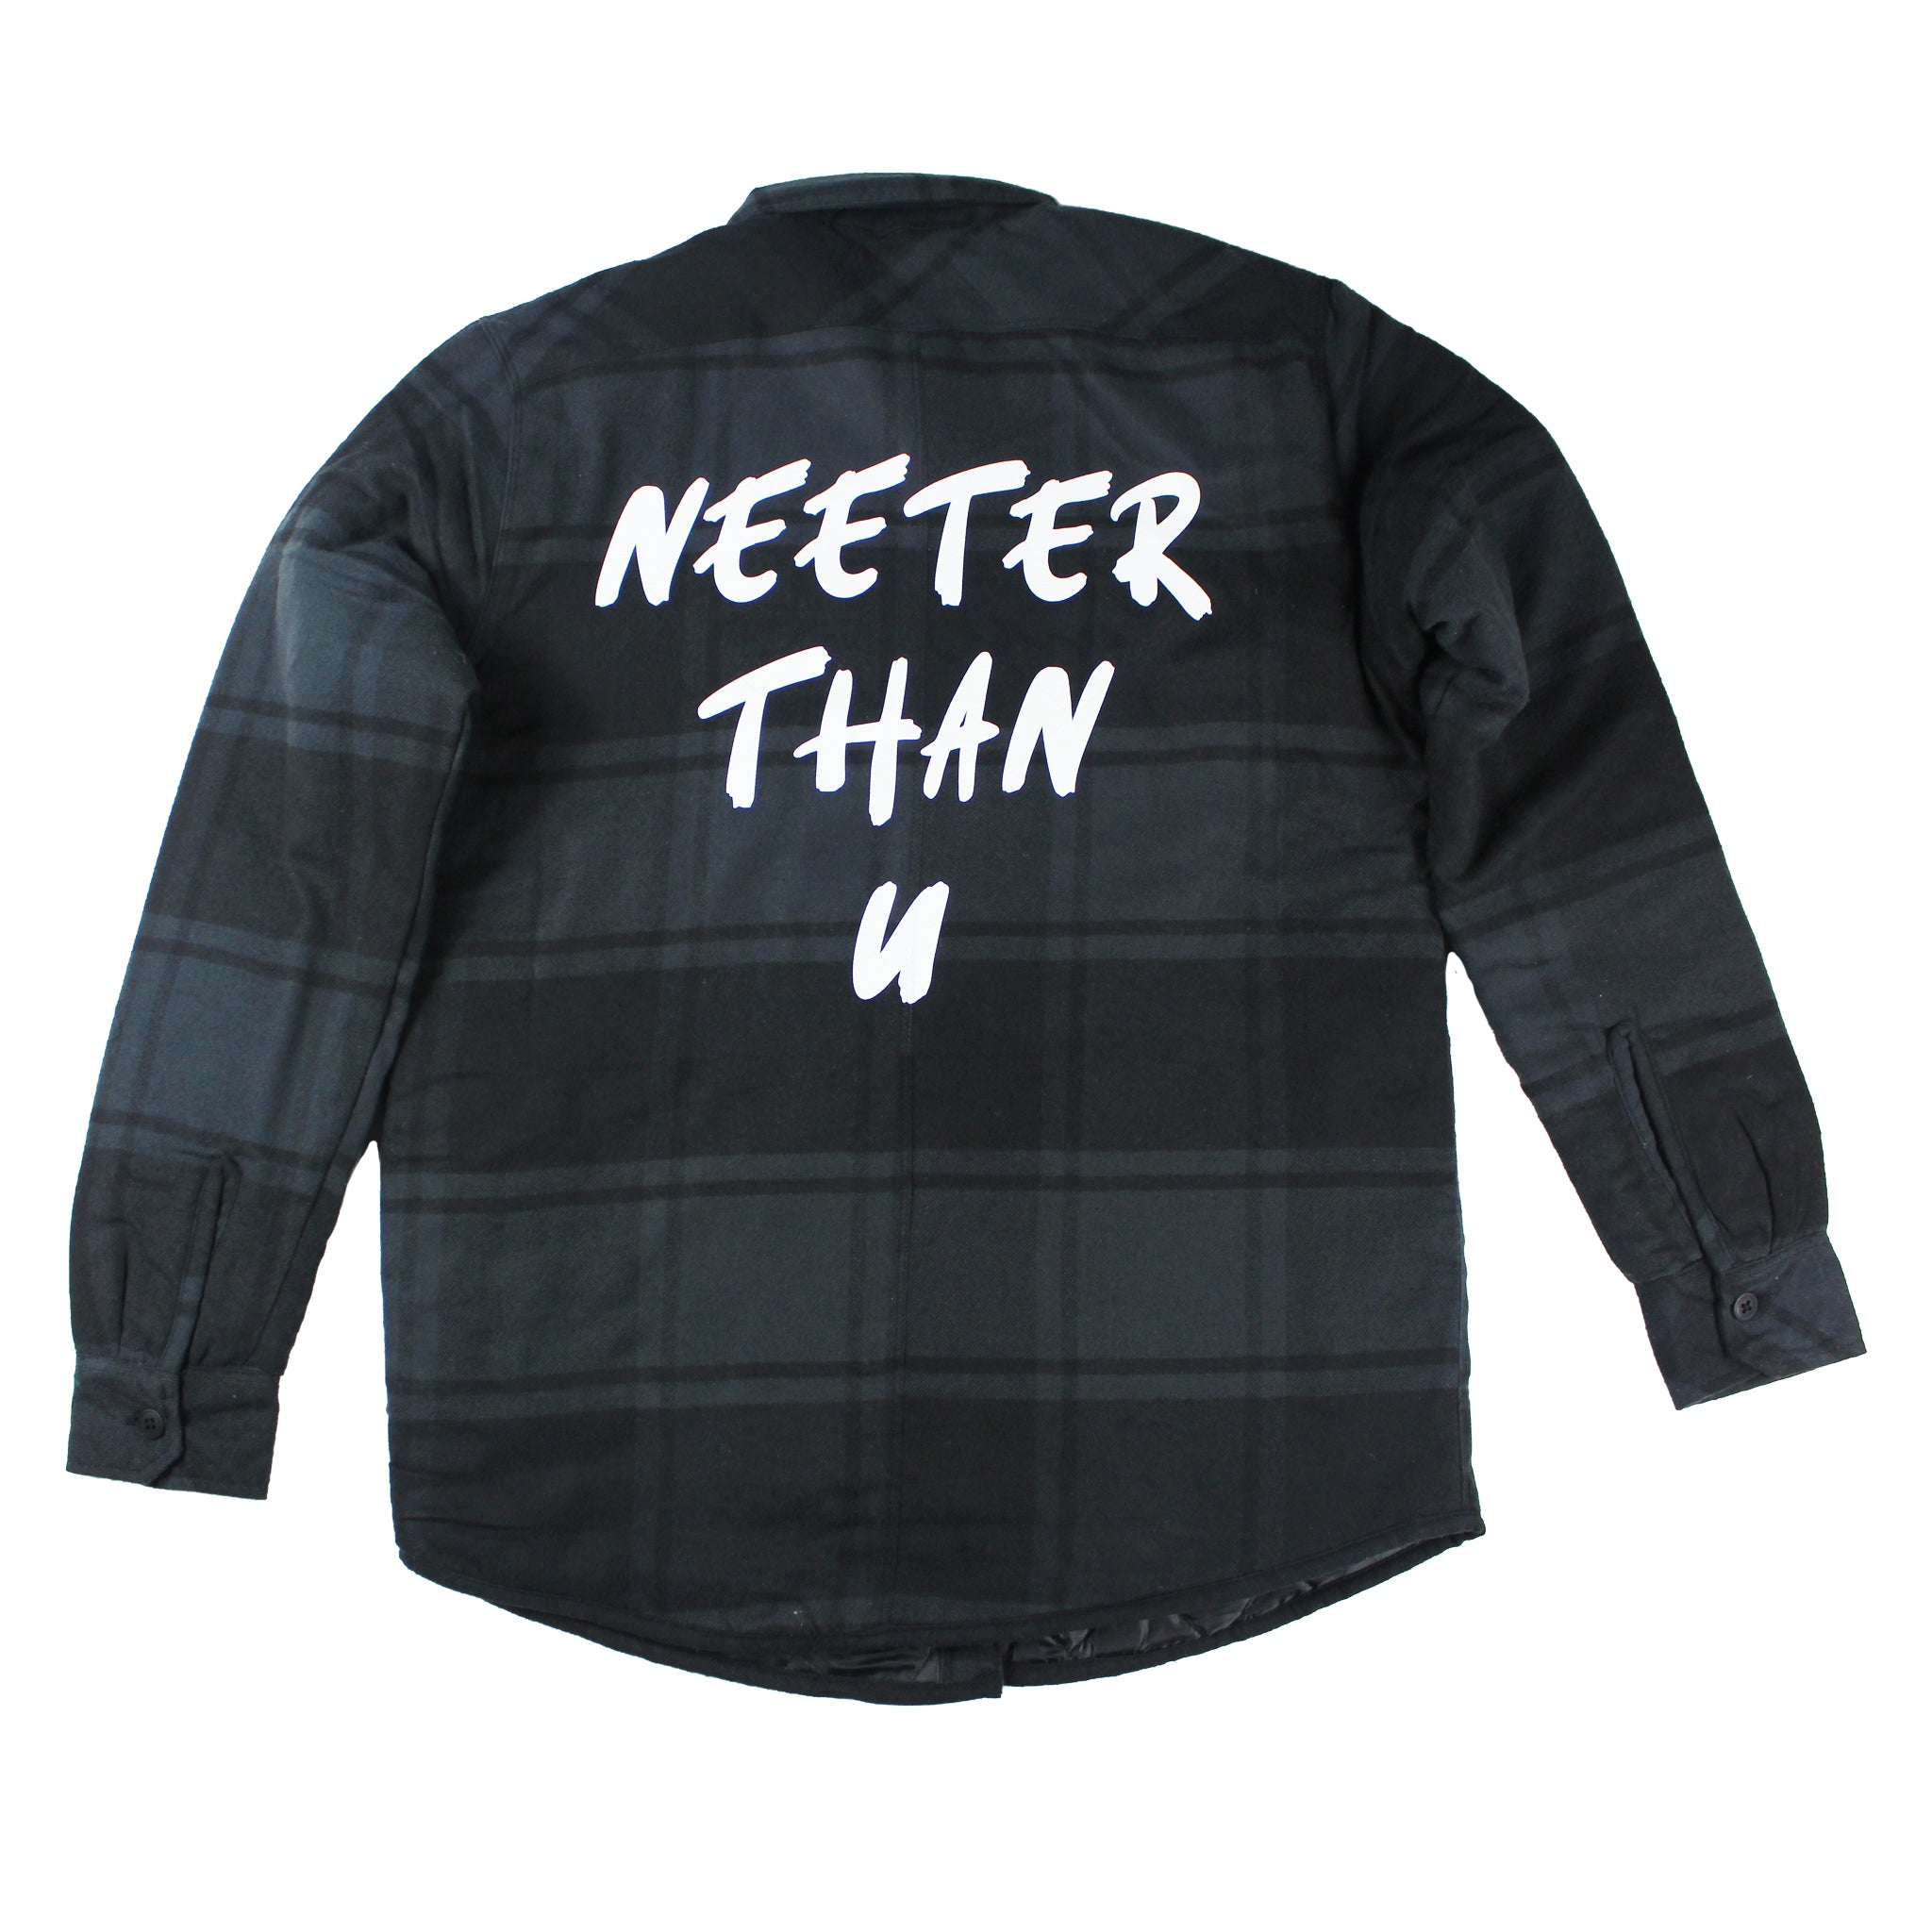 Neeter Than u (Flannel Jacket)